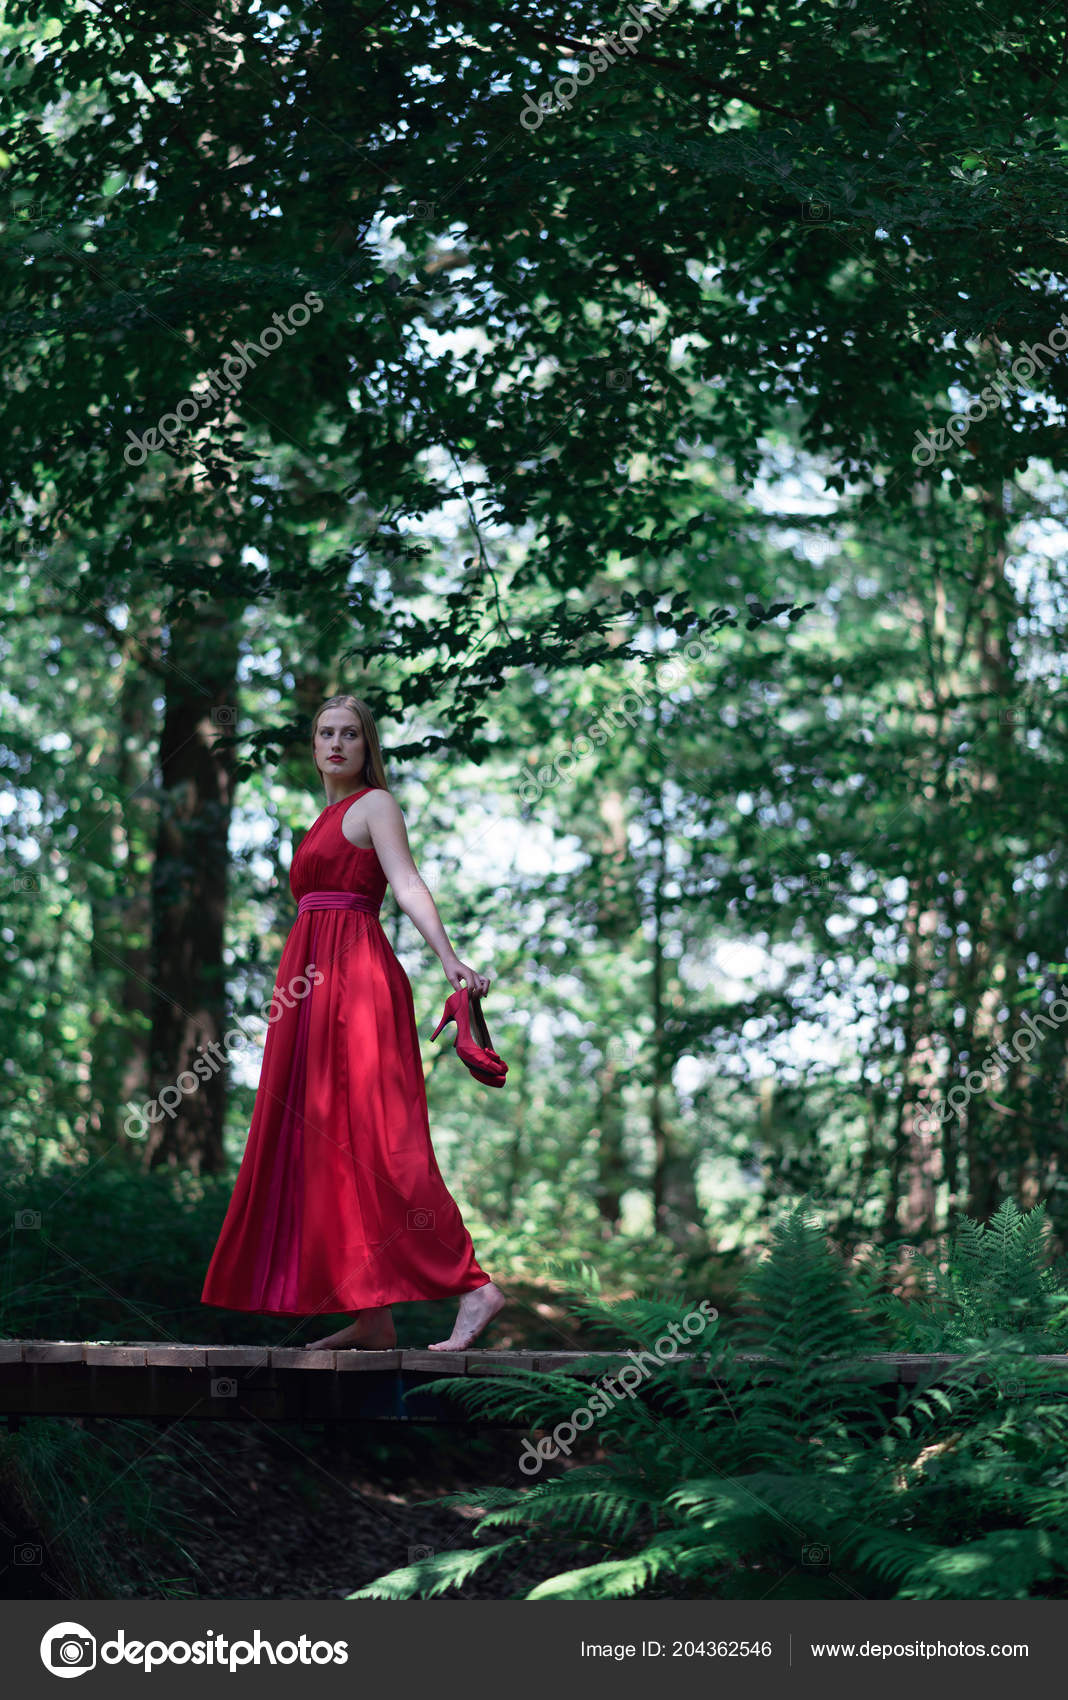 https://st4.depositphotos.com/1550494/20436/i/1600/depositphotos_204362546-stock-photo-woman-red-dress-crossing-wooden.jpg